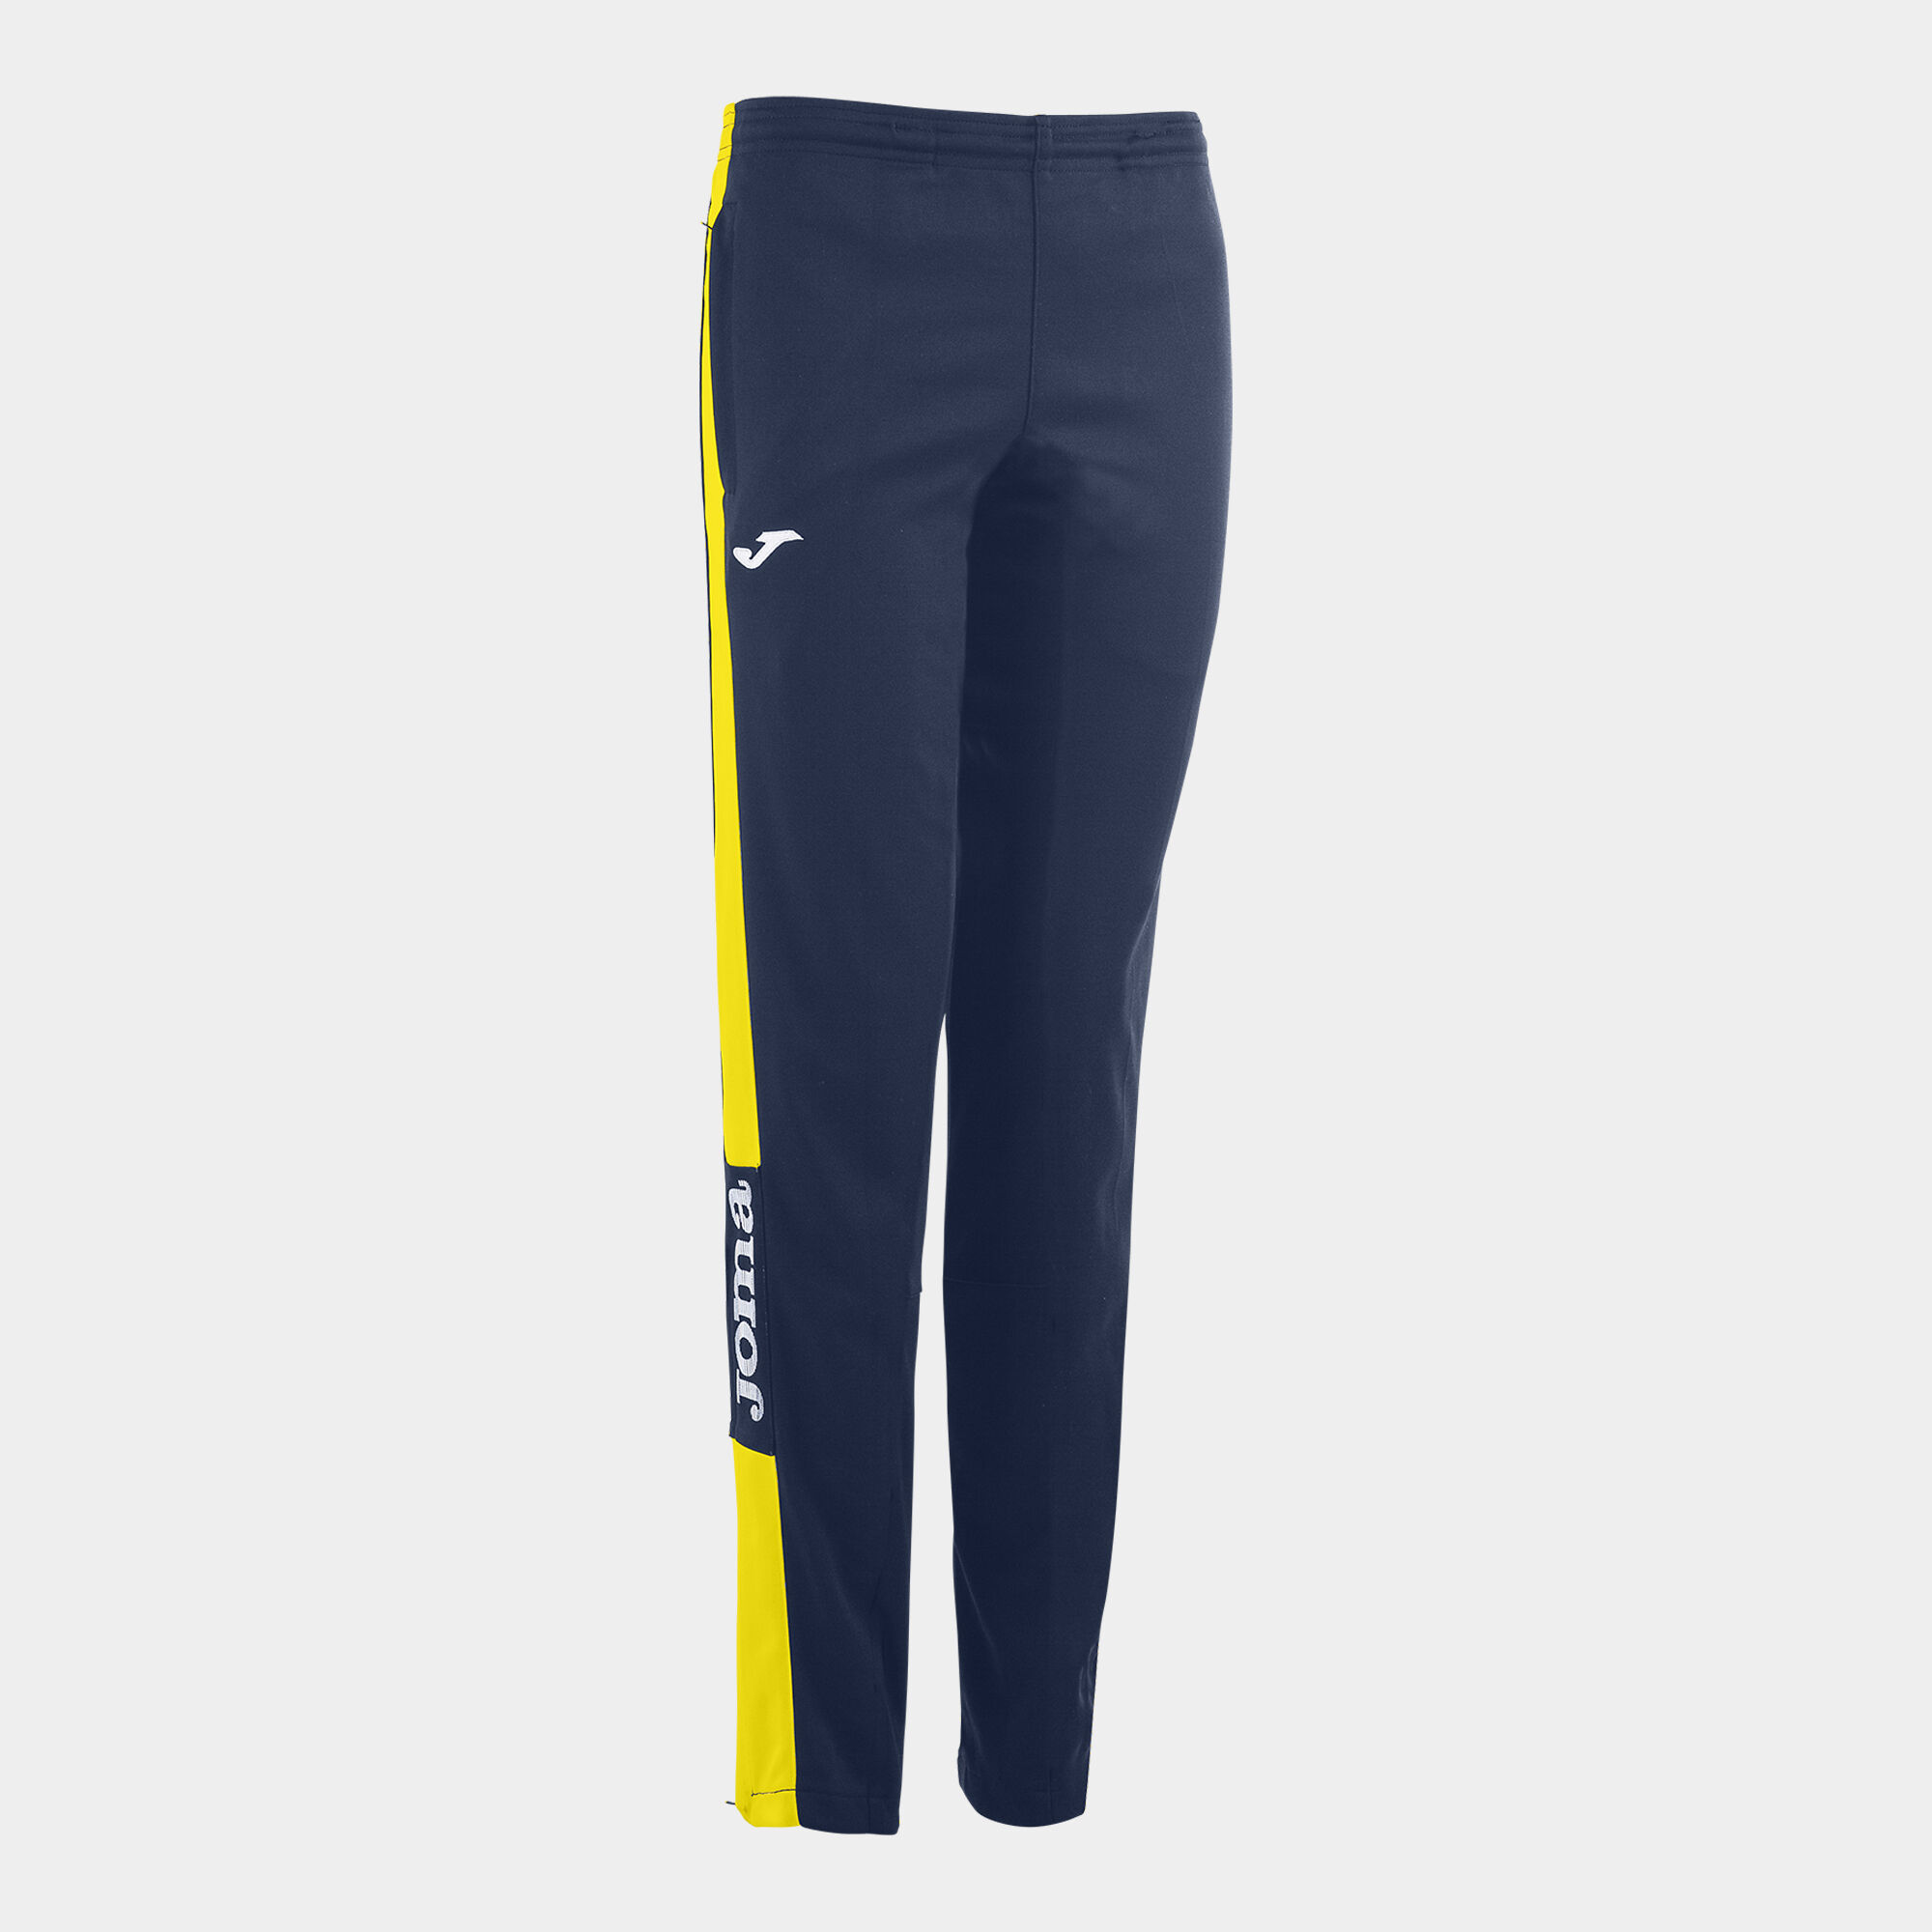 Longs pants woman Championship IV navy blue yellow